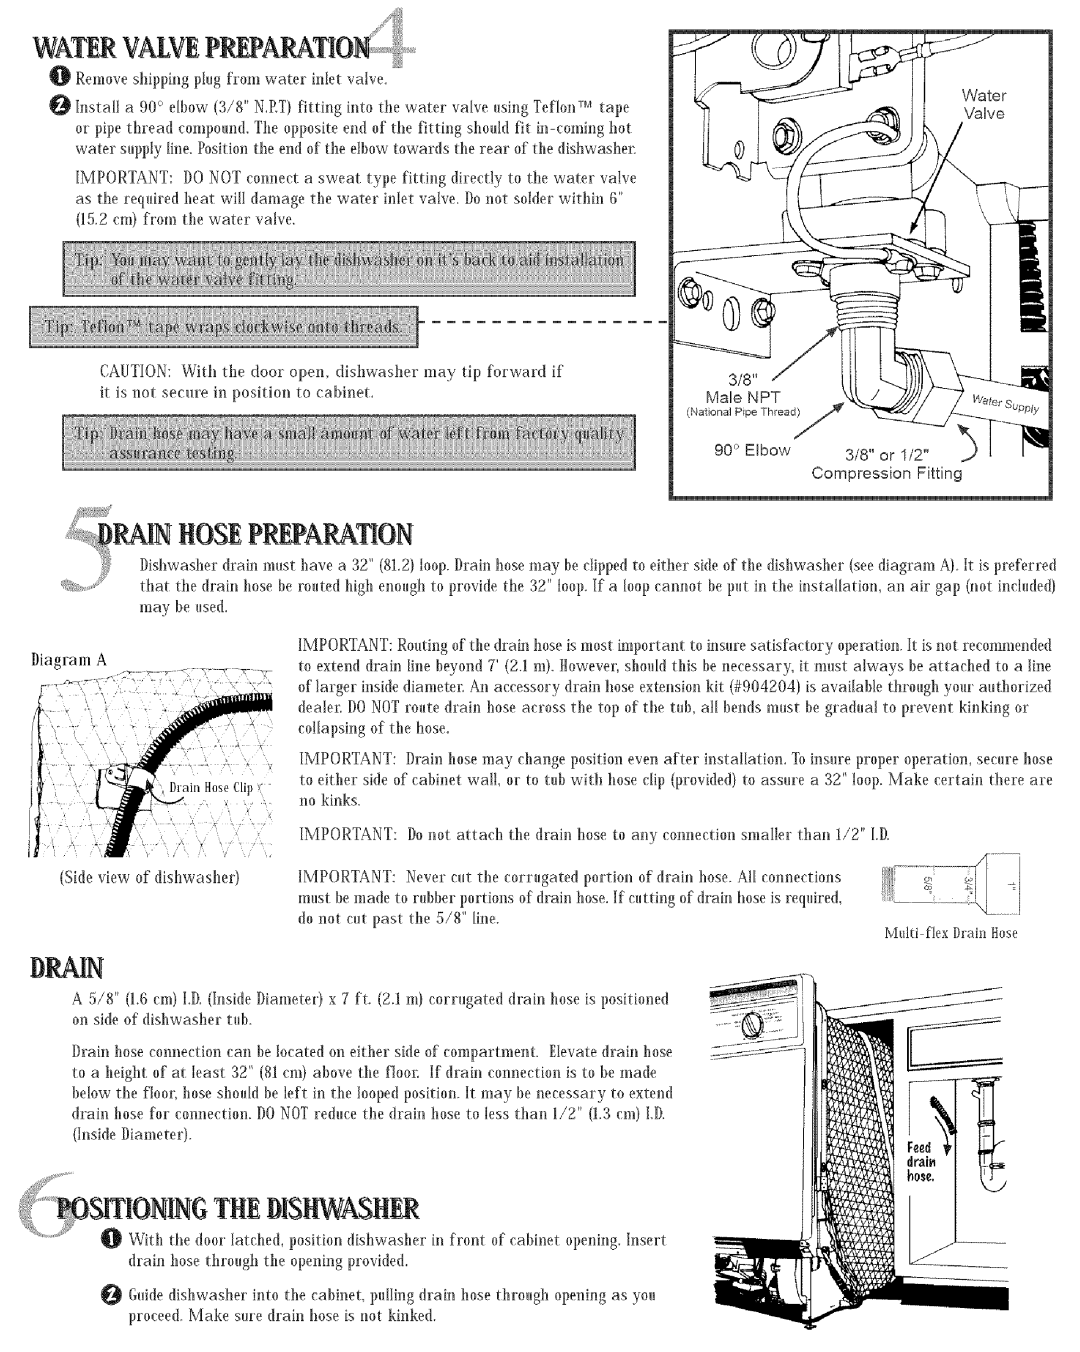 Amana L0503010 smoRIRG TRtDISRWASRtR, Rair Rosepreparation, Dra N, Water Valv, Diagram A, Shle view of dishwasher 